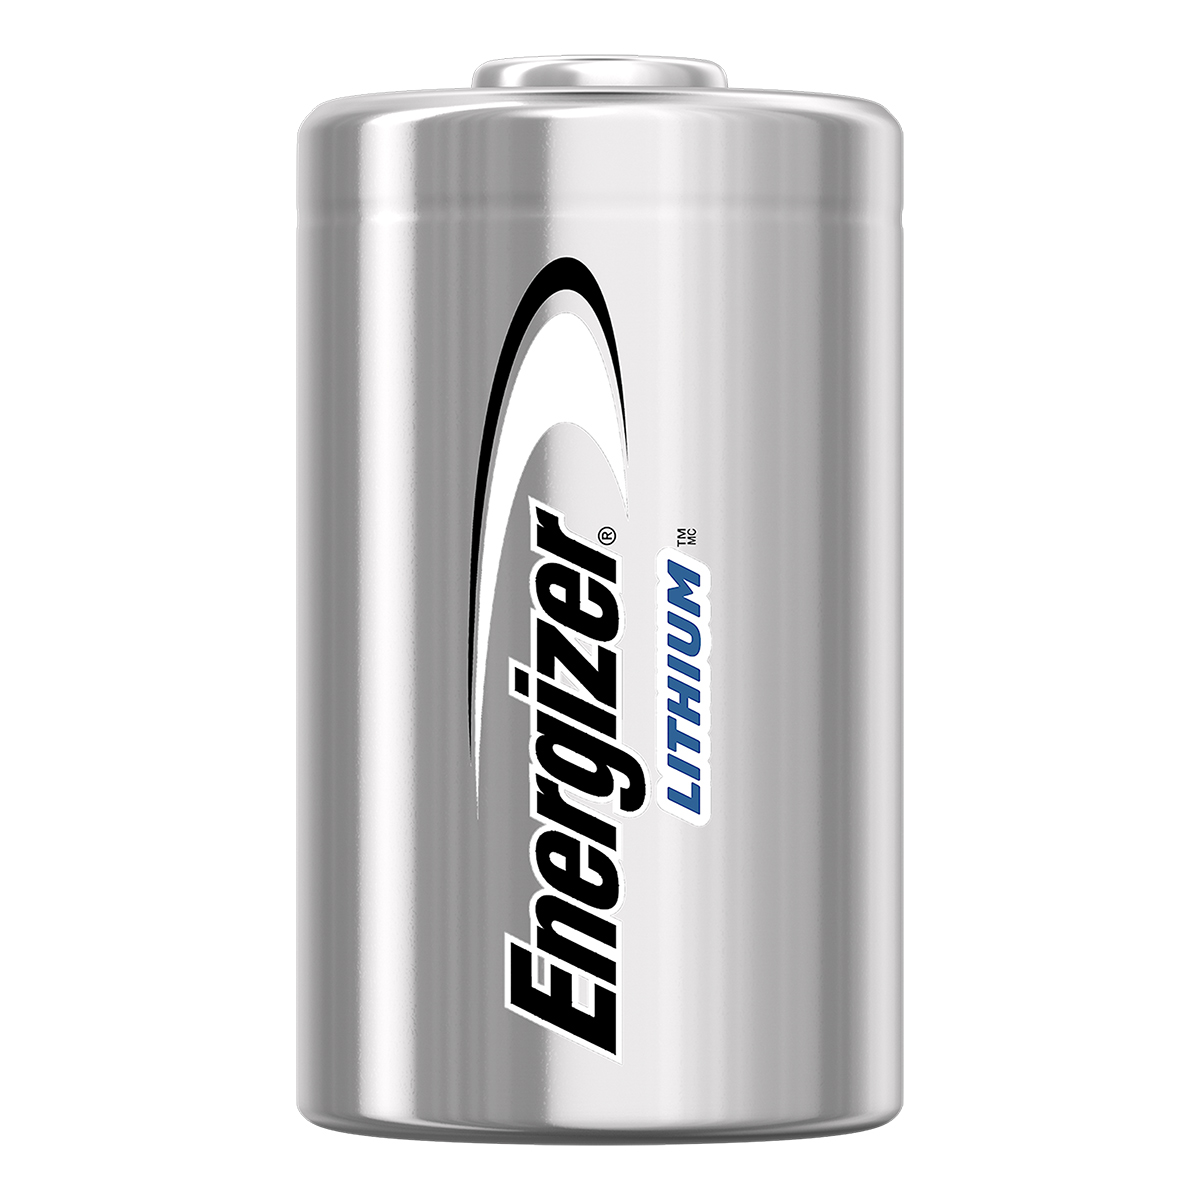 Energizer lithium photo battery CR2